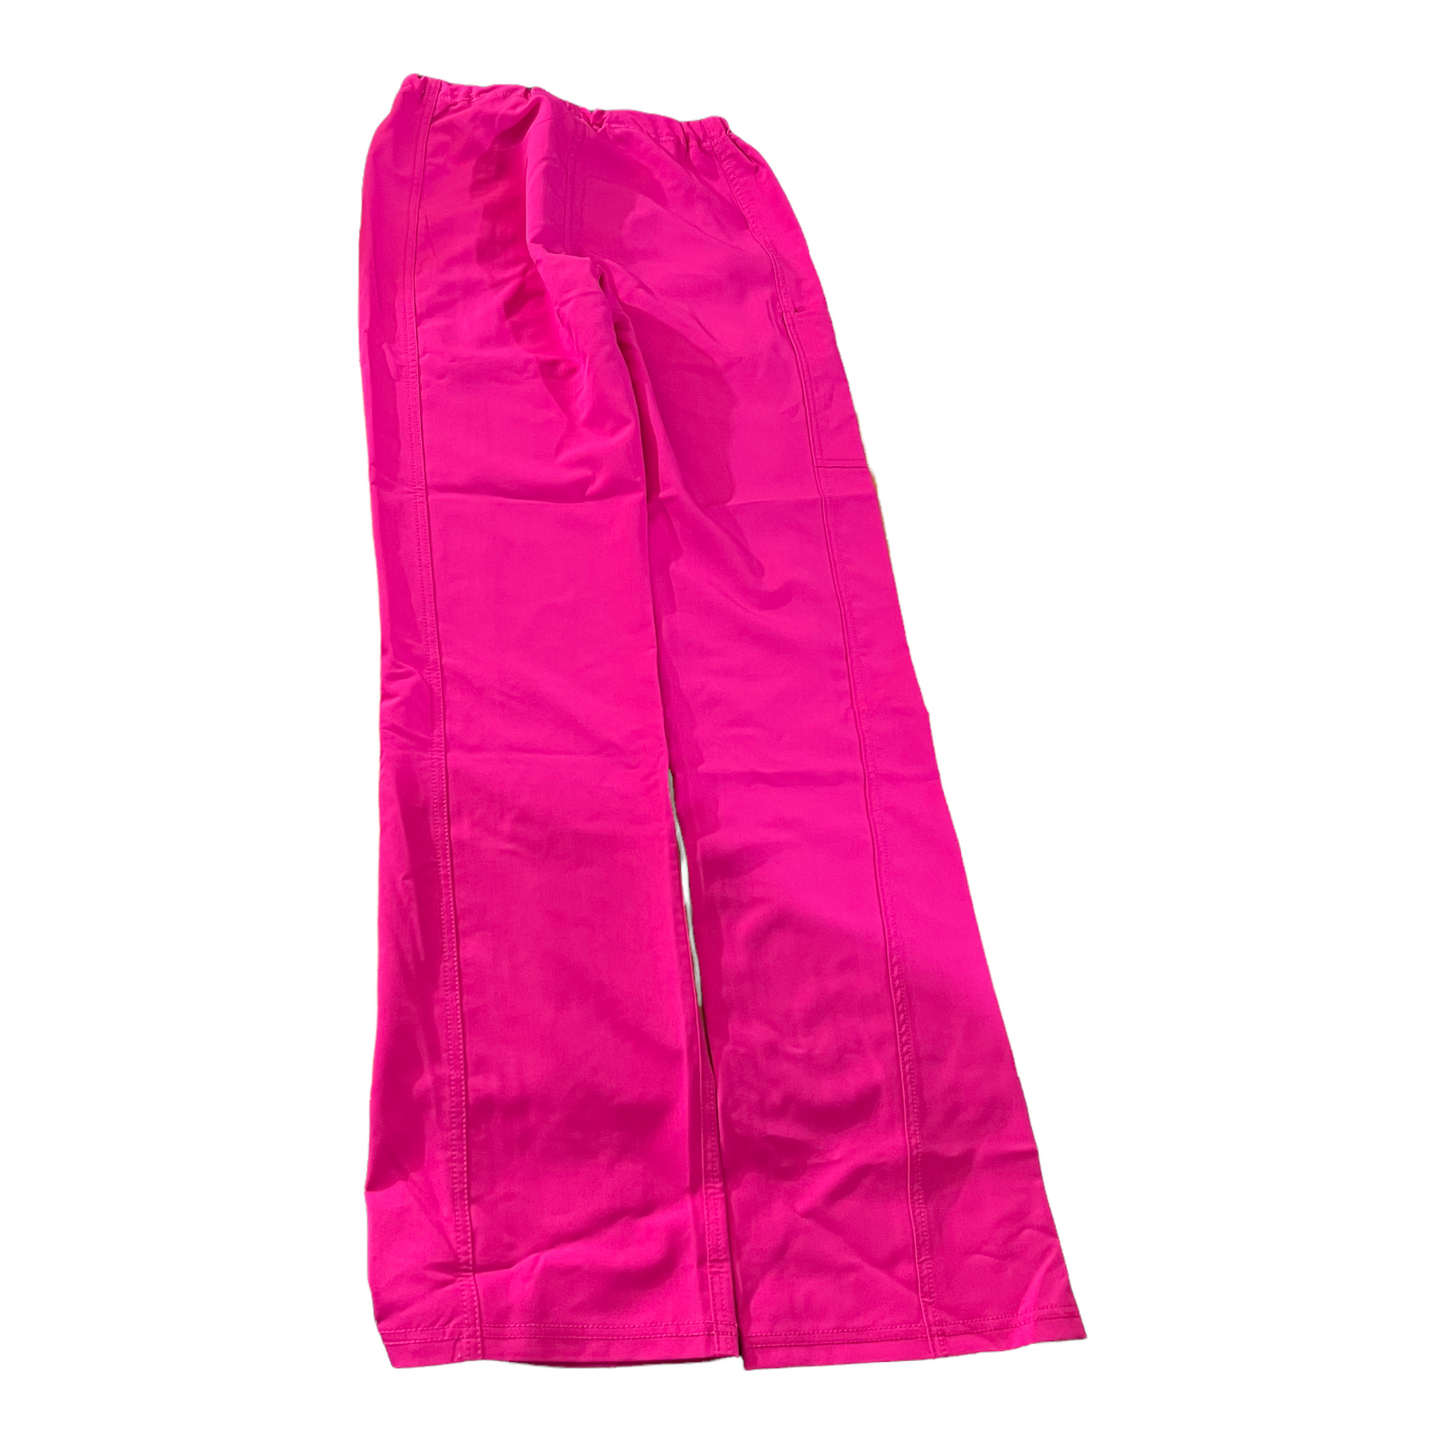 New Hot Pink Careisma Scrubs Drawstring Closure Size XS (Tall)